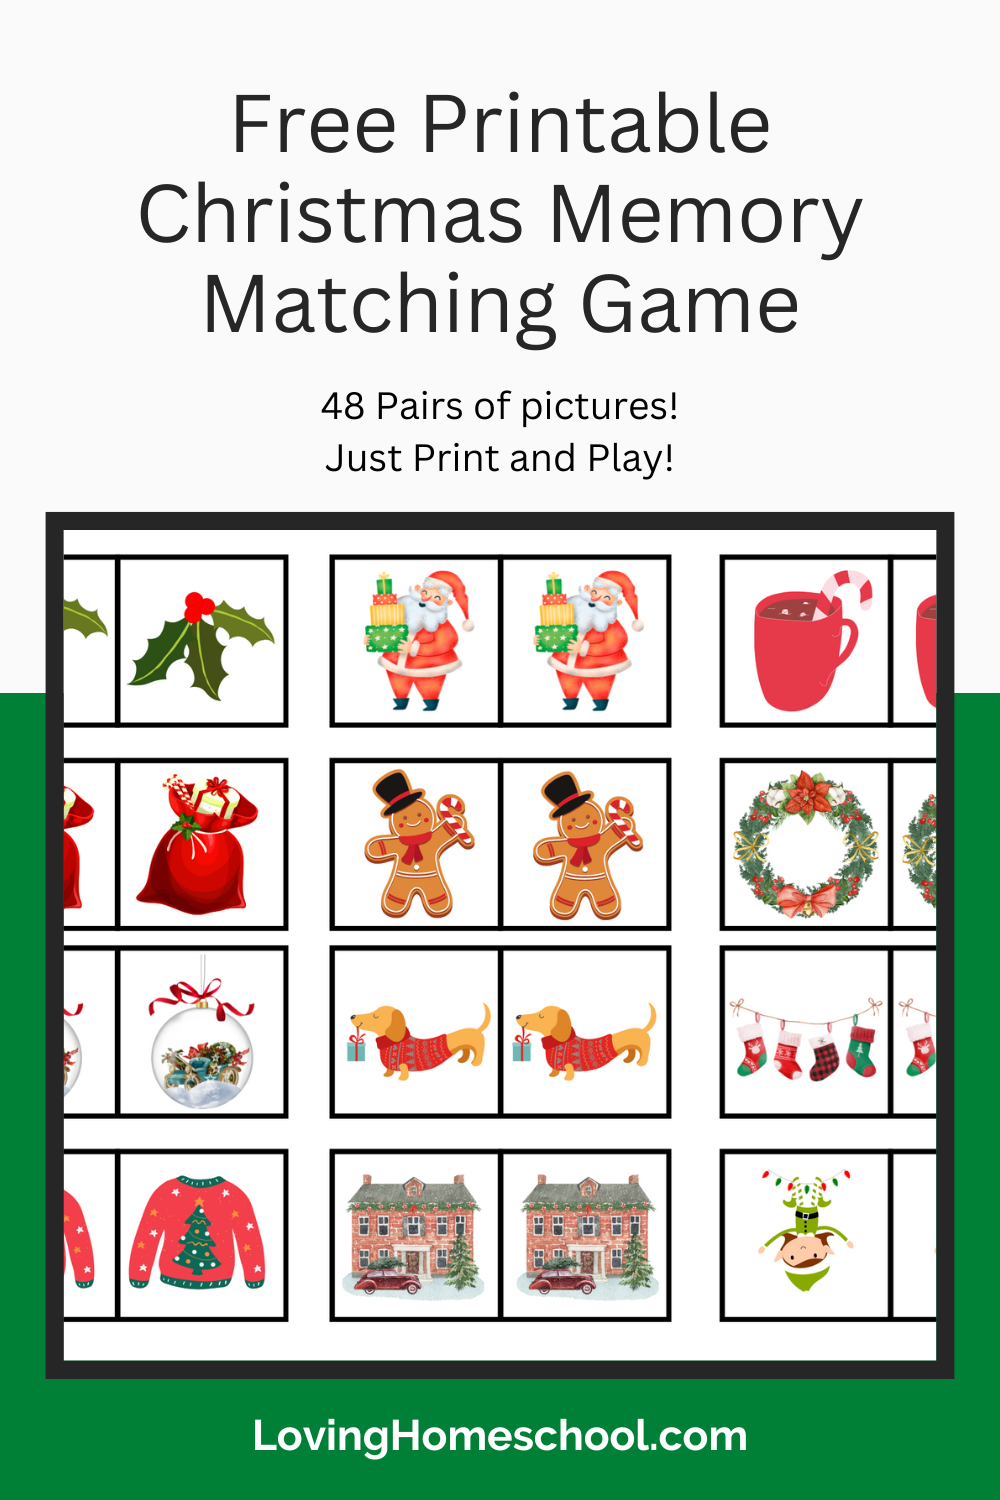 https://lovinghomeschool.com/wp-content/uploads/2022/11/Free-Printable-Christmas-Memory-Matching-Game-Pinterest-Pin.png